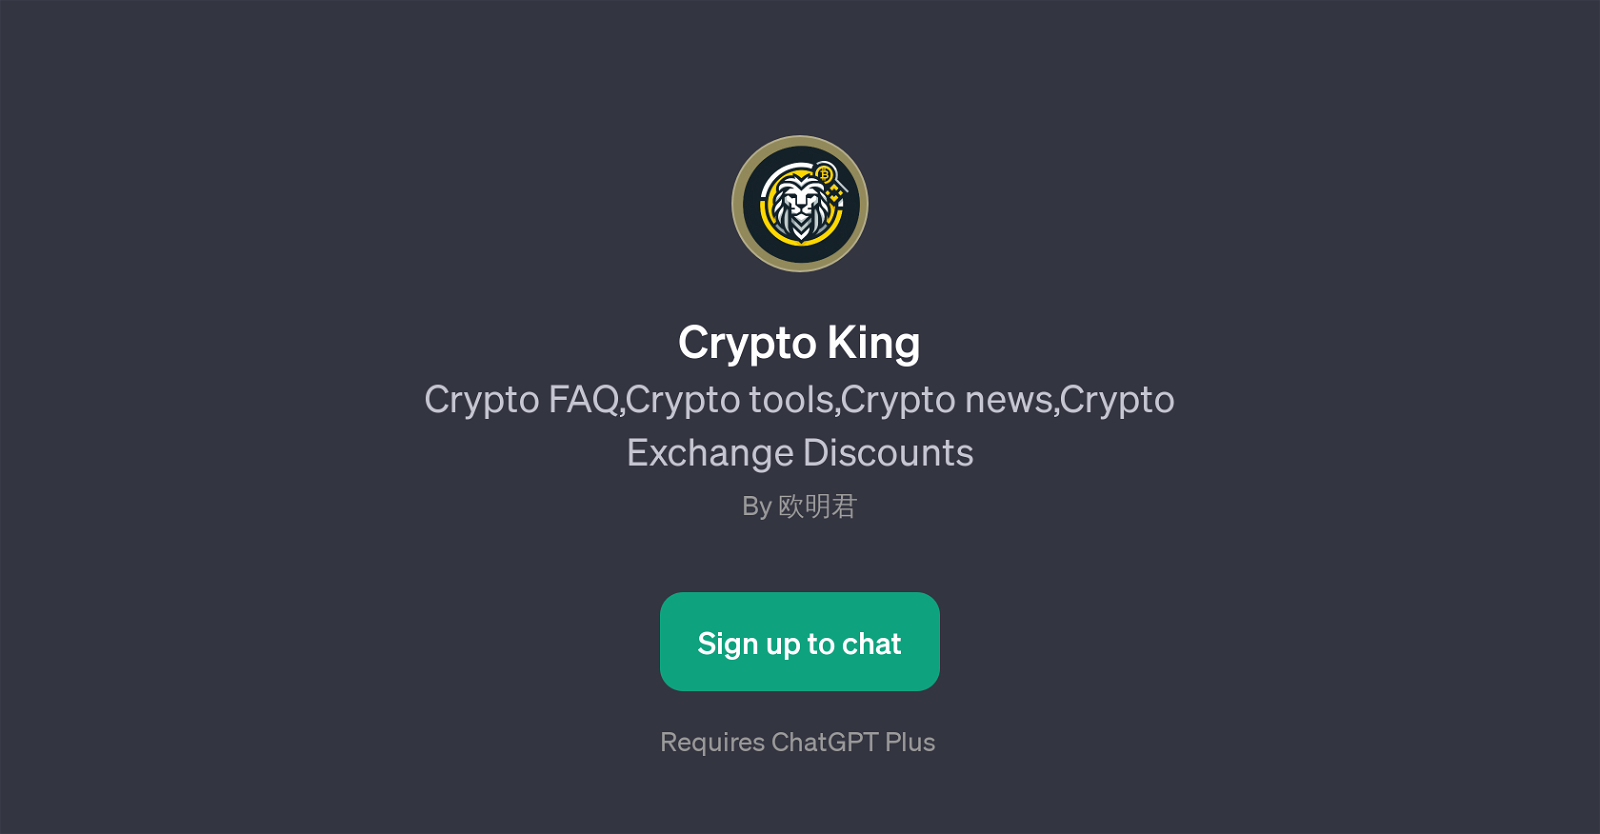 Crypto King website